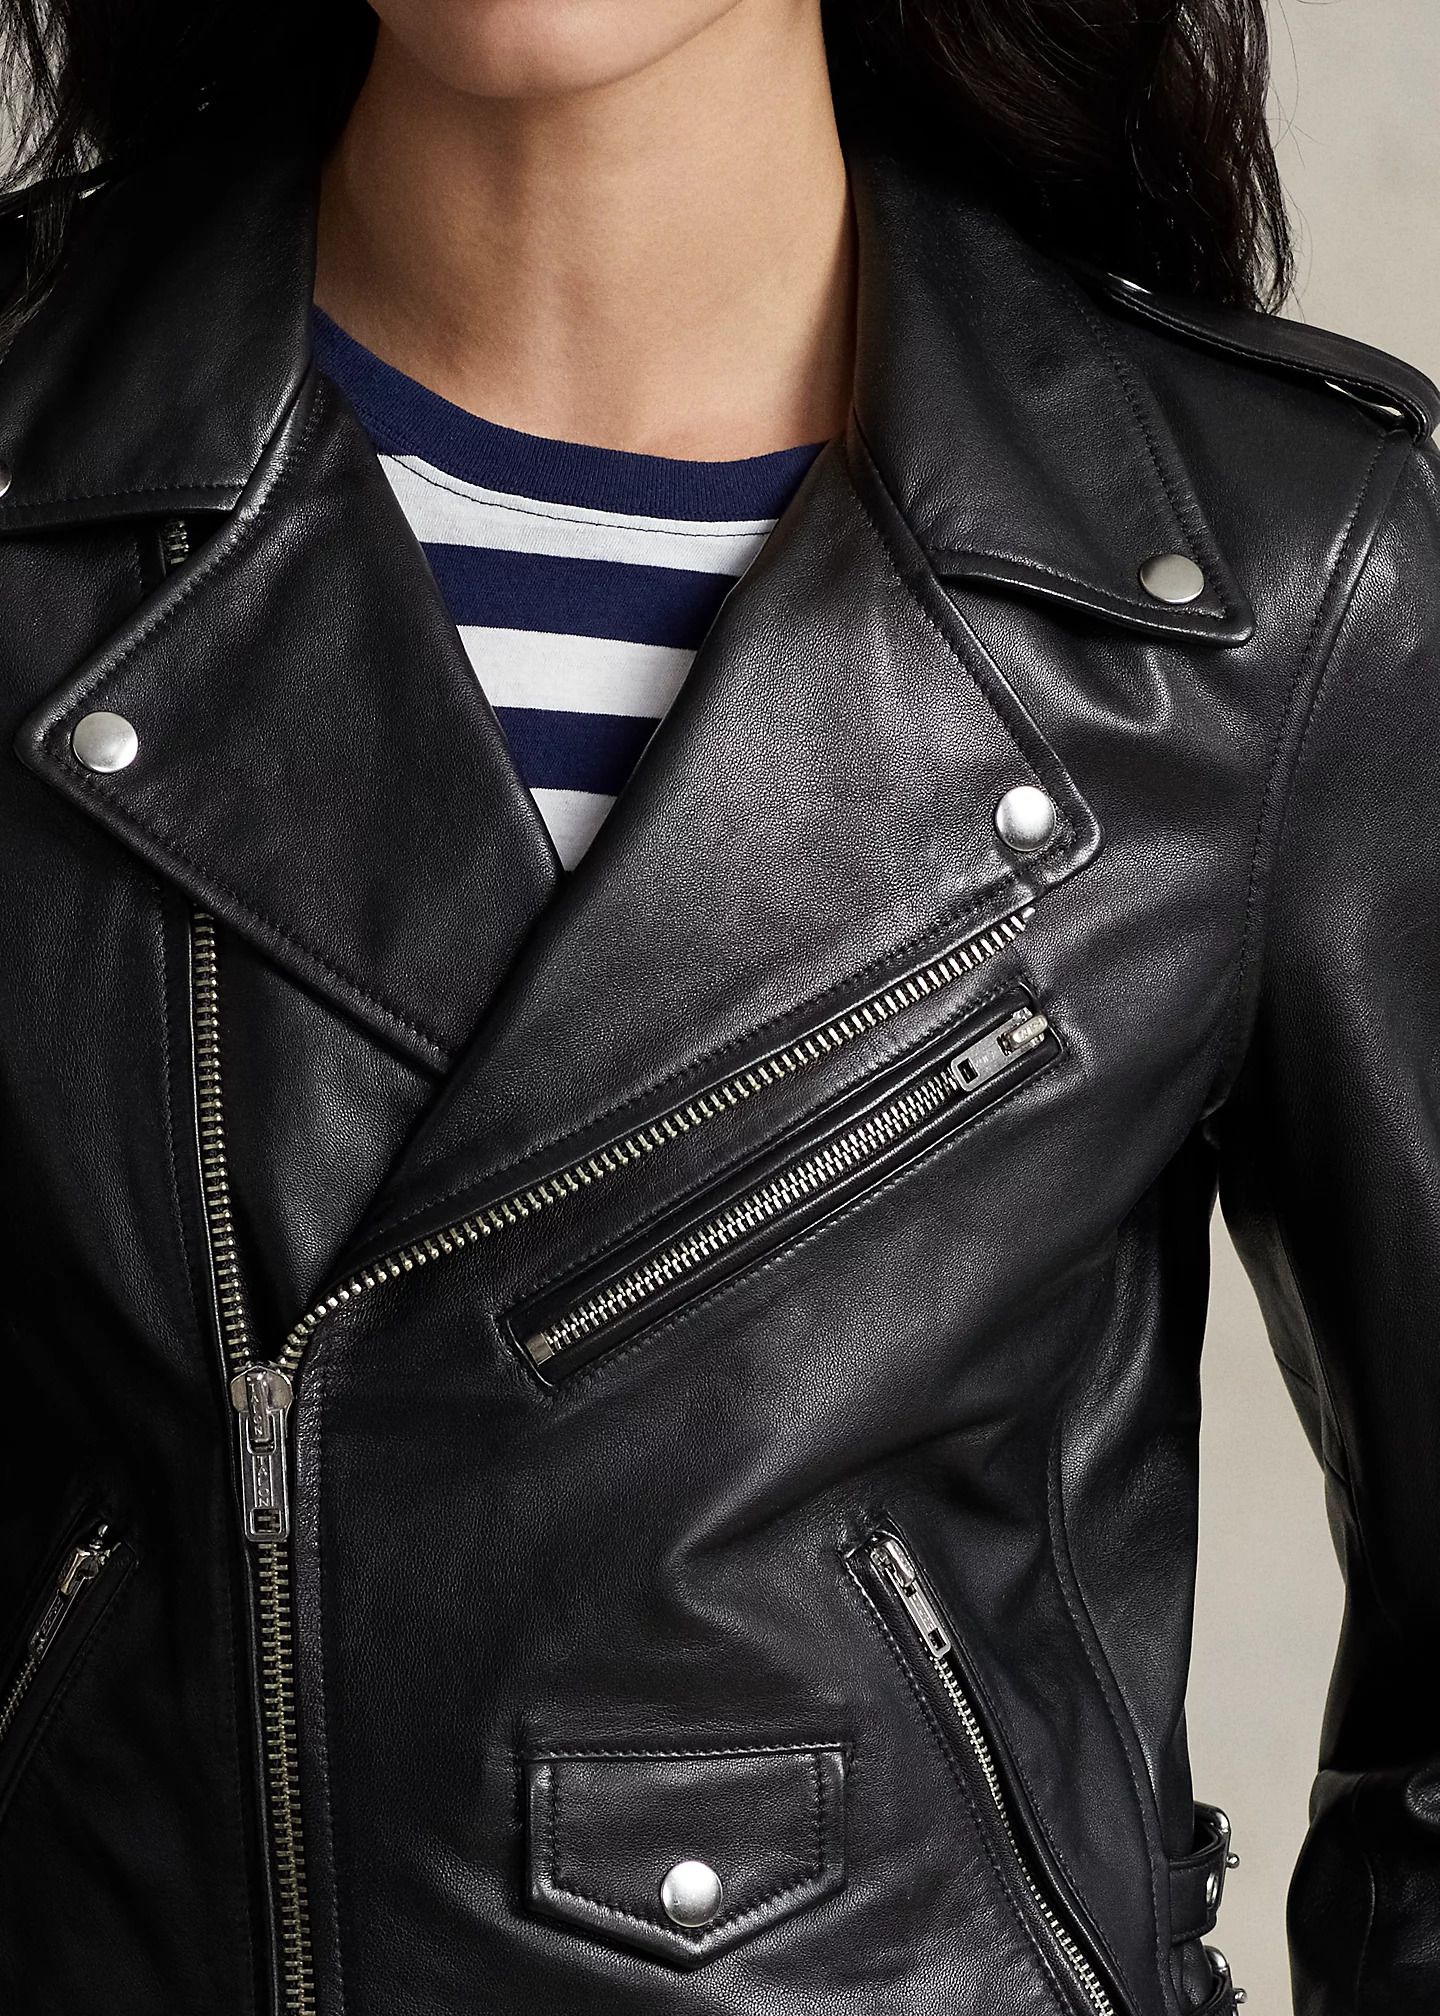 Leather-Trim High-Pile Fleece Jacket